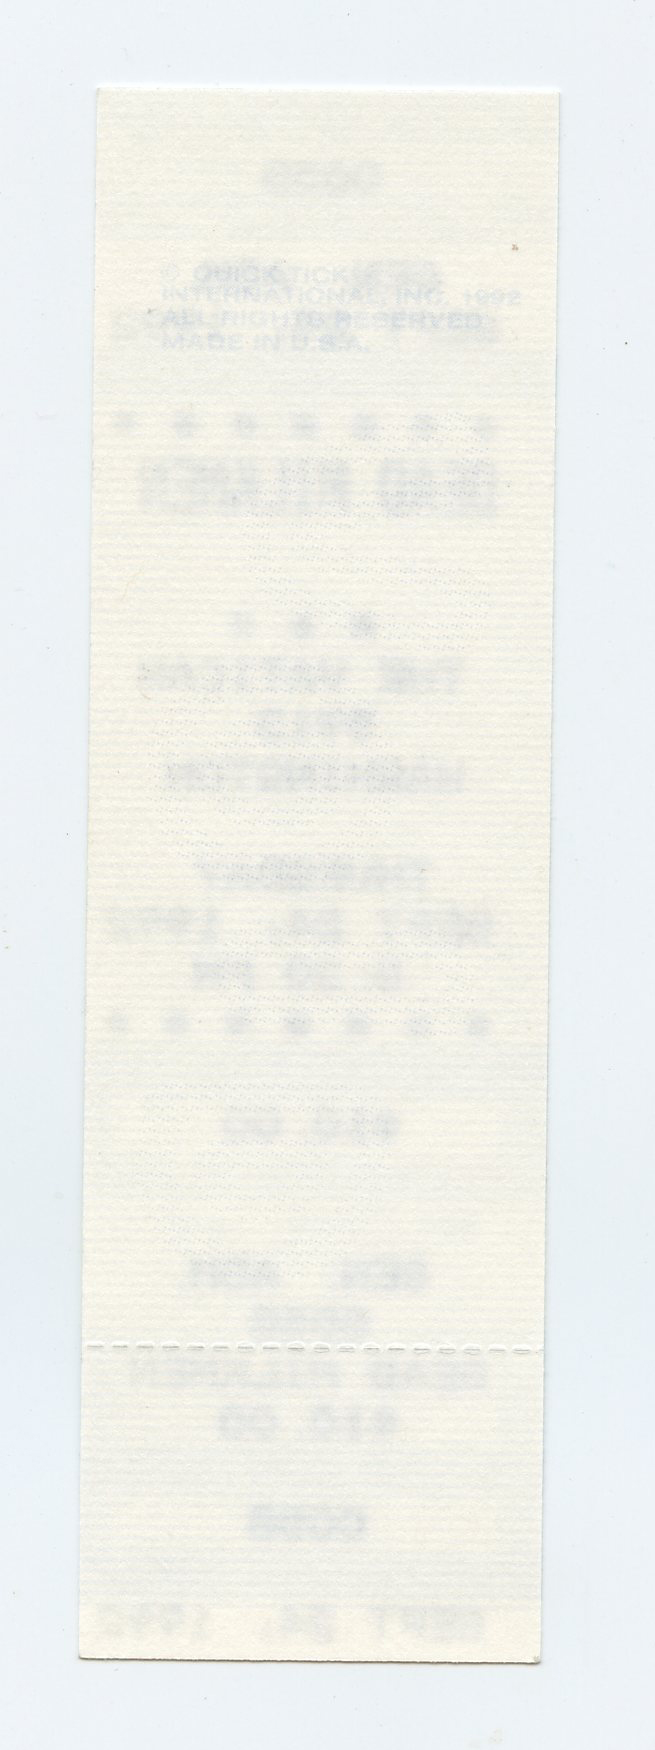 Dead Milkmen Vintage Ticket 1992 Sep 24 The Vatican Houston 